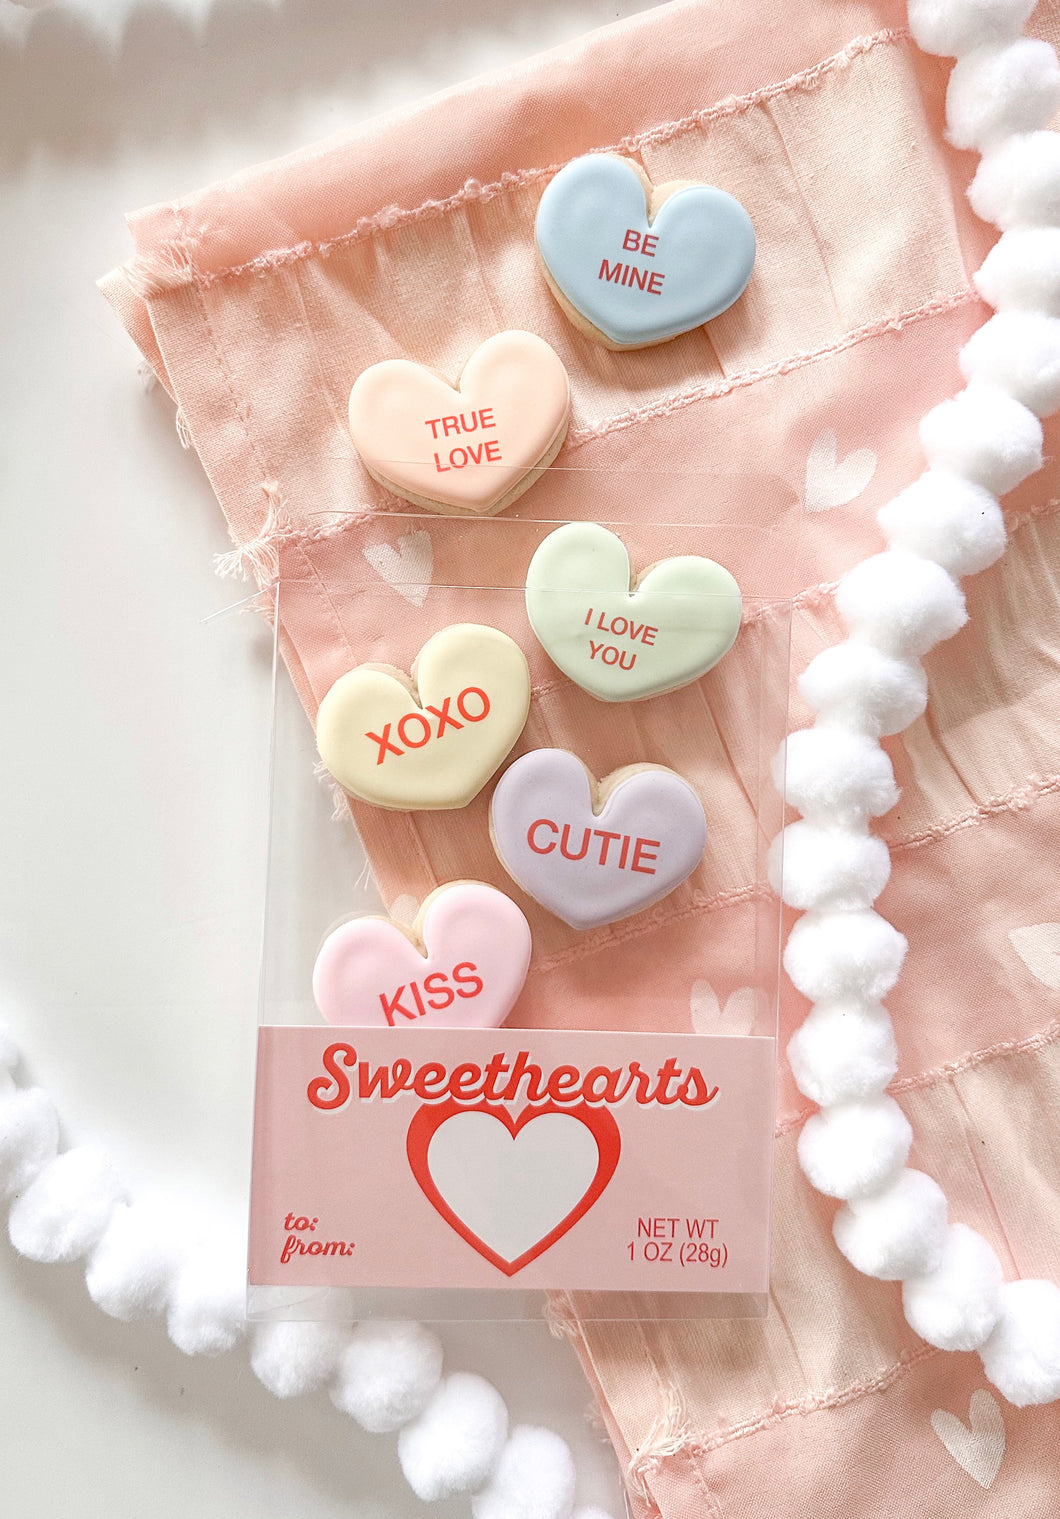 Sweethearts Mini Cookie set